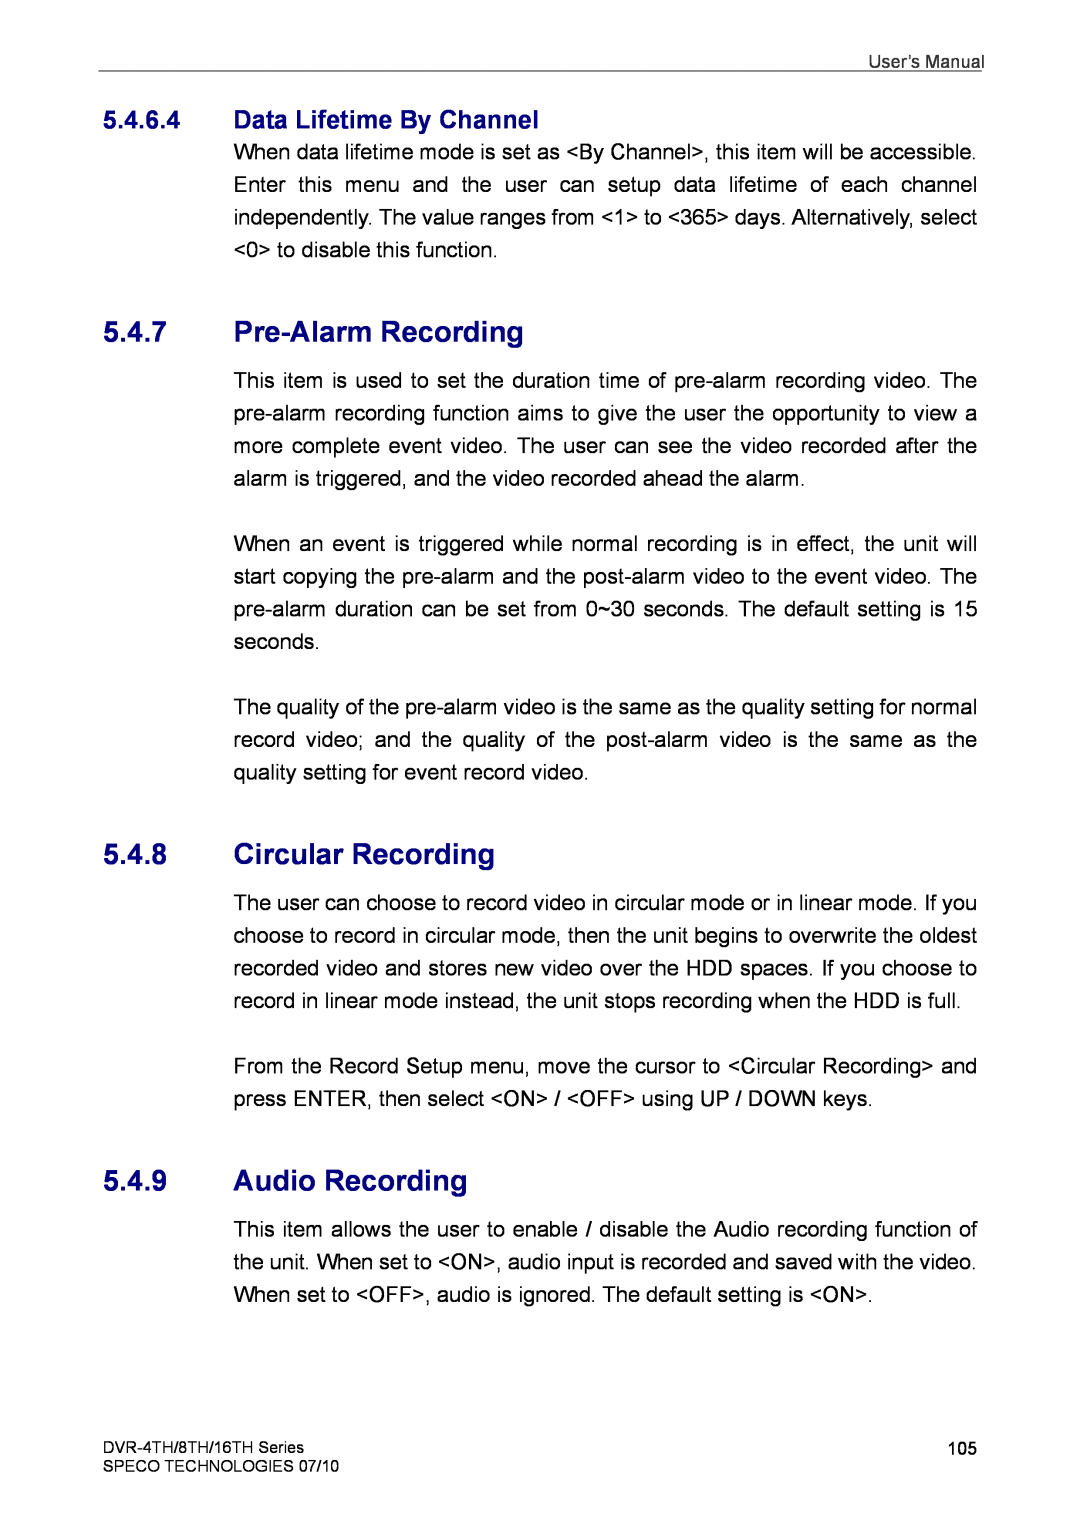 Speco Technologies 4TH, 8TH, 16TH Pre-Alarm Recording, Circular Recording, Audio Recording, Data Lifetime By Channel 